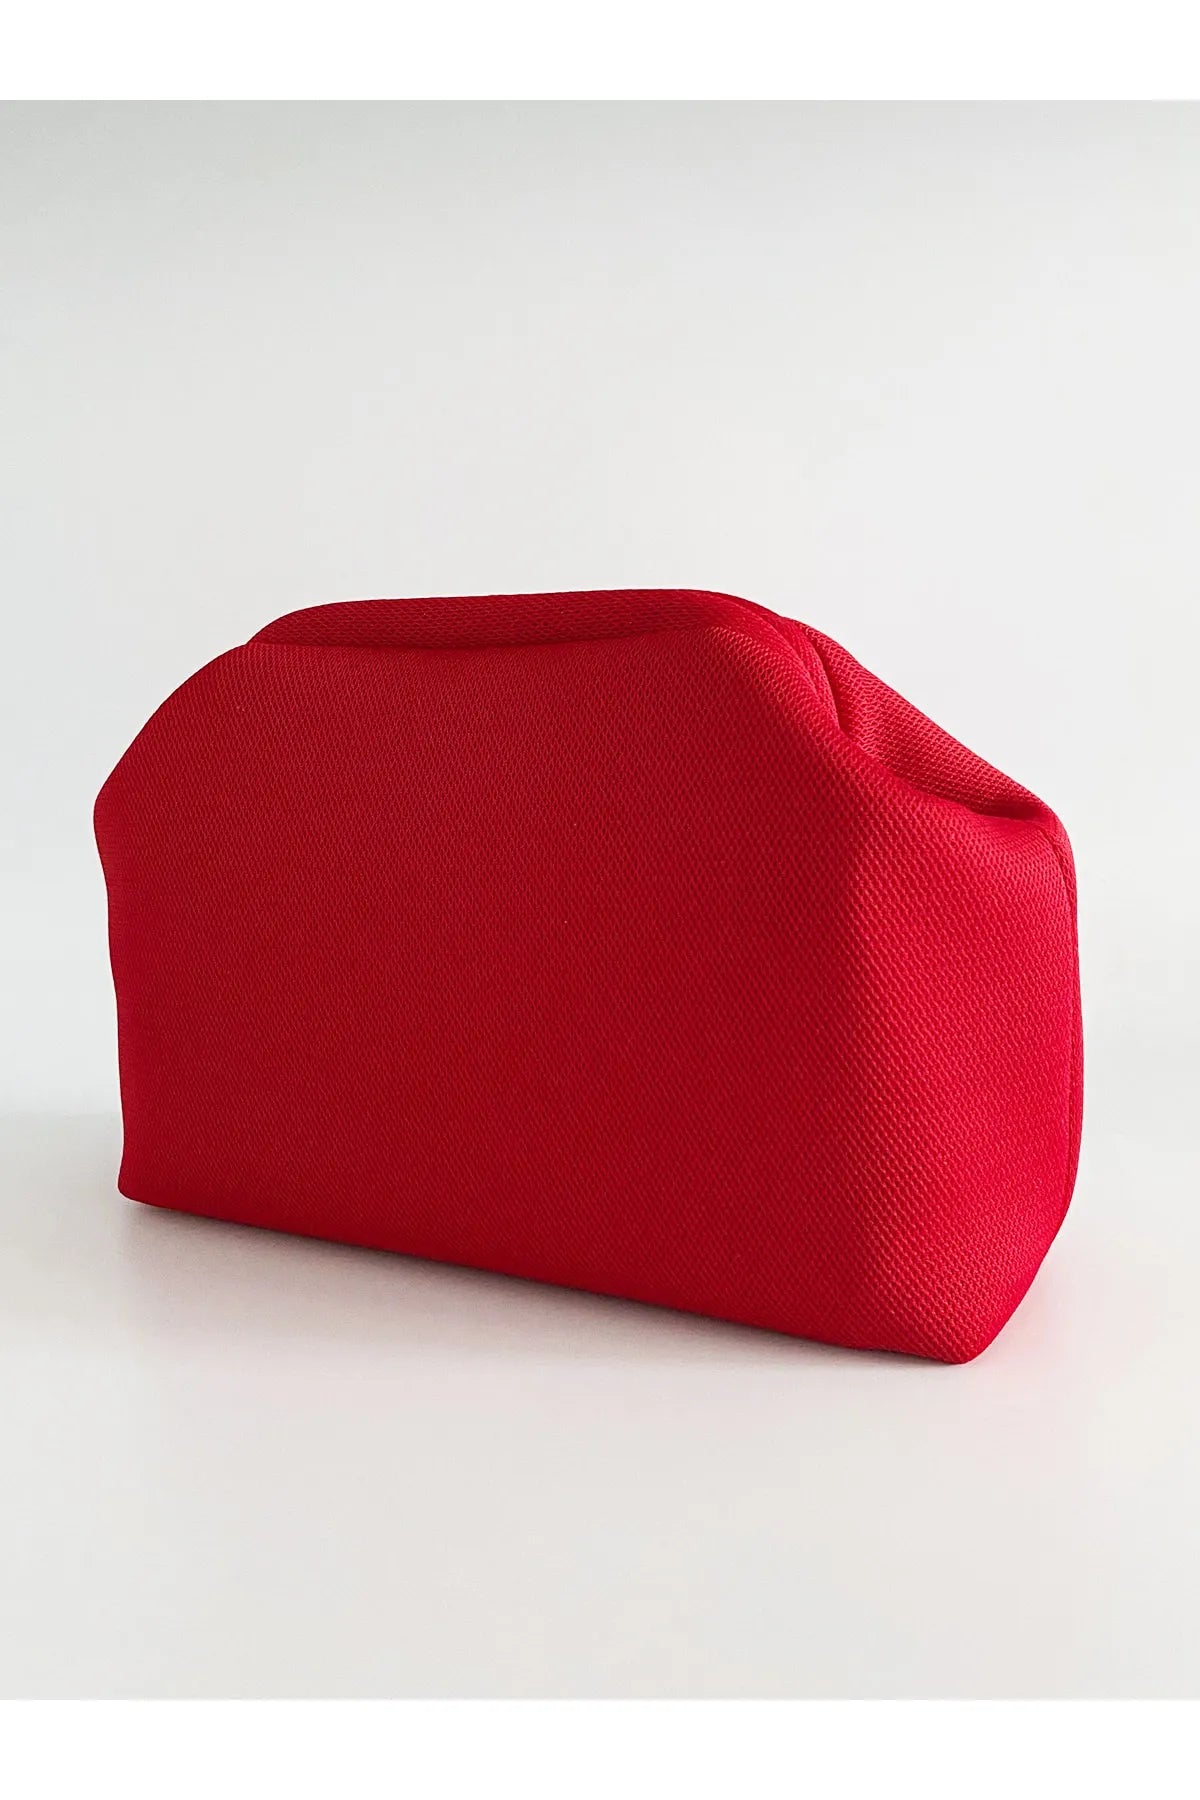 Red Clutch Bag clutch LUNARITY GARAGE   